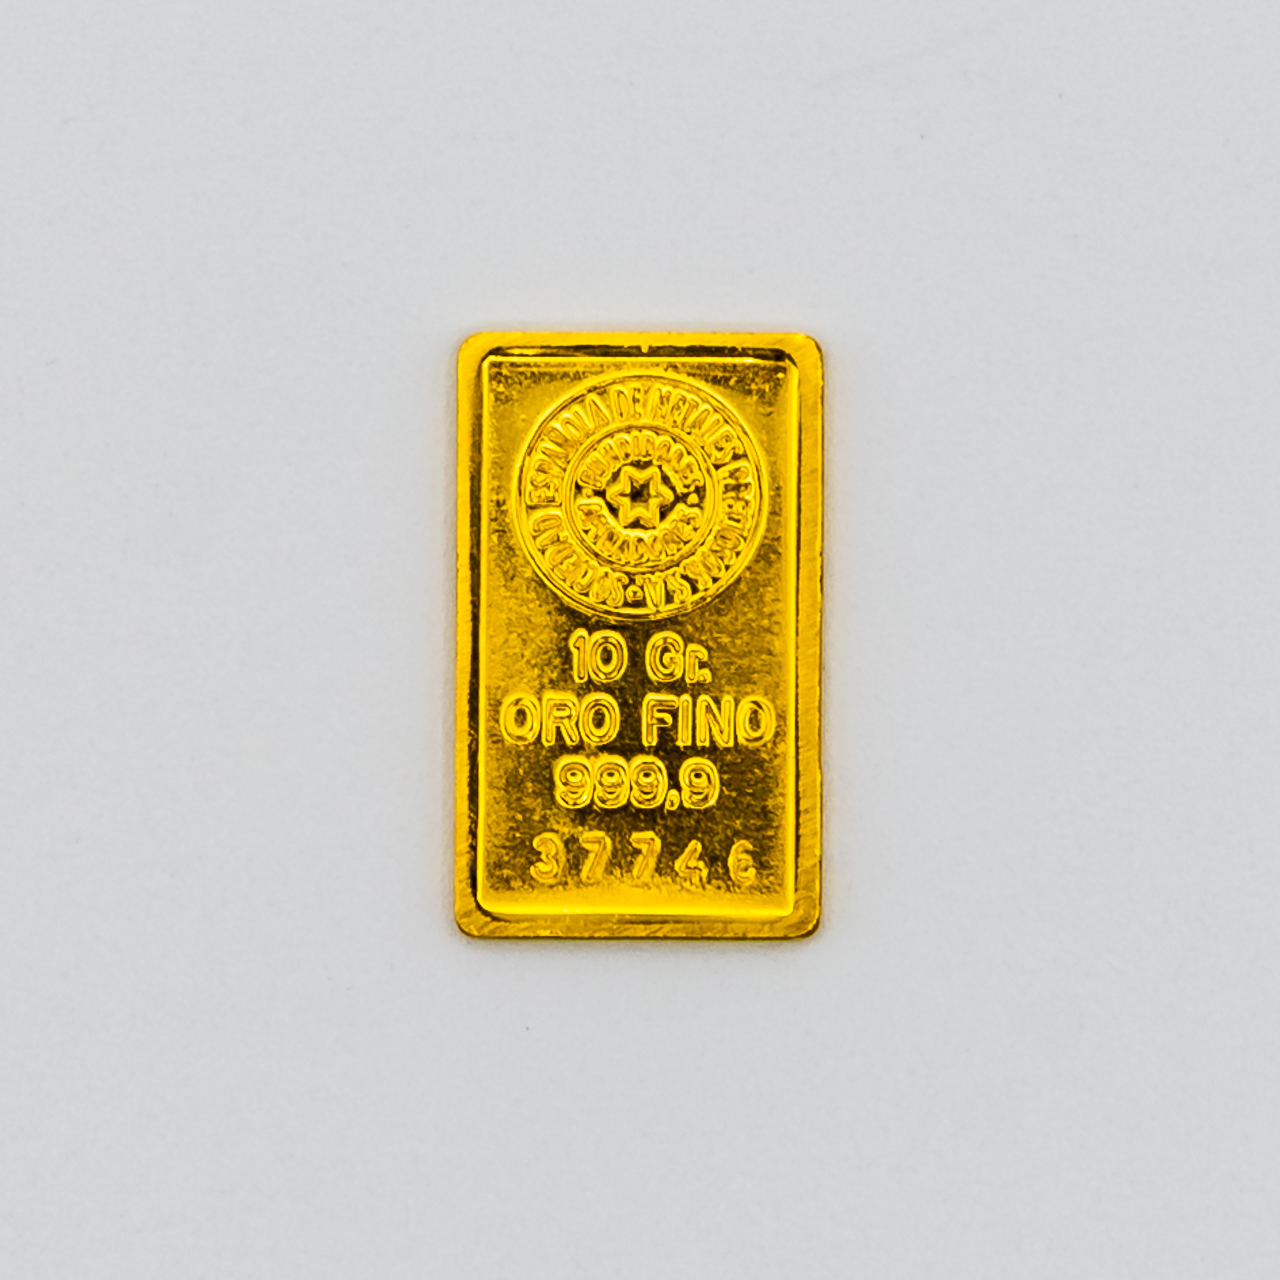 1,0 gramos de oro fino motivo-mapa signo del zodíaco "escorpión" lingote de oro oro 999,9 